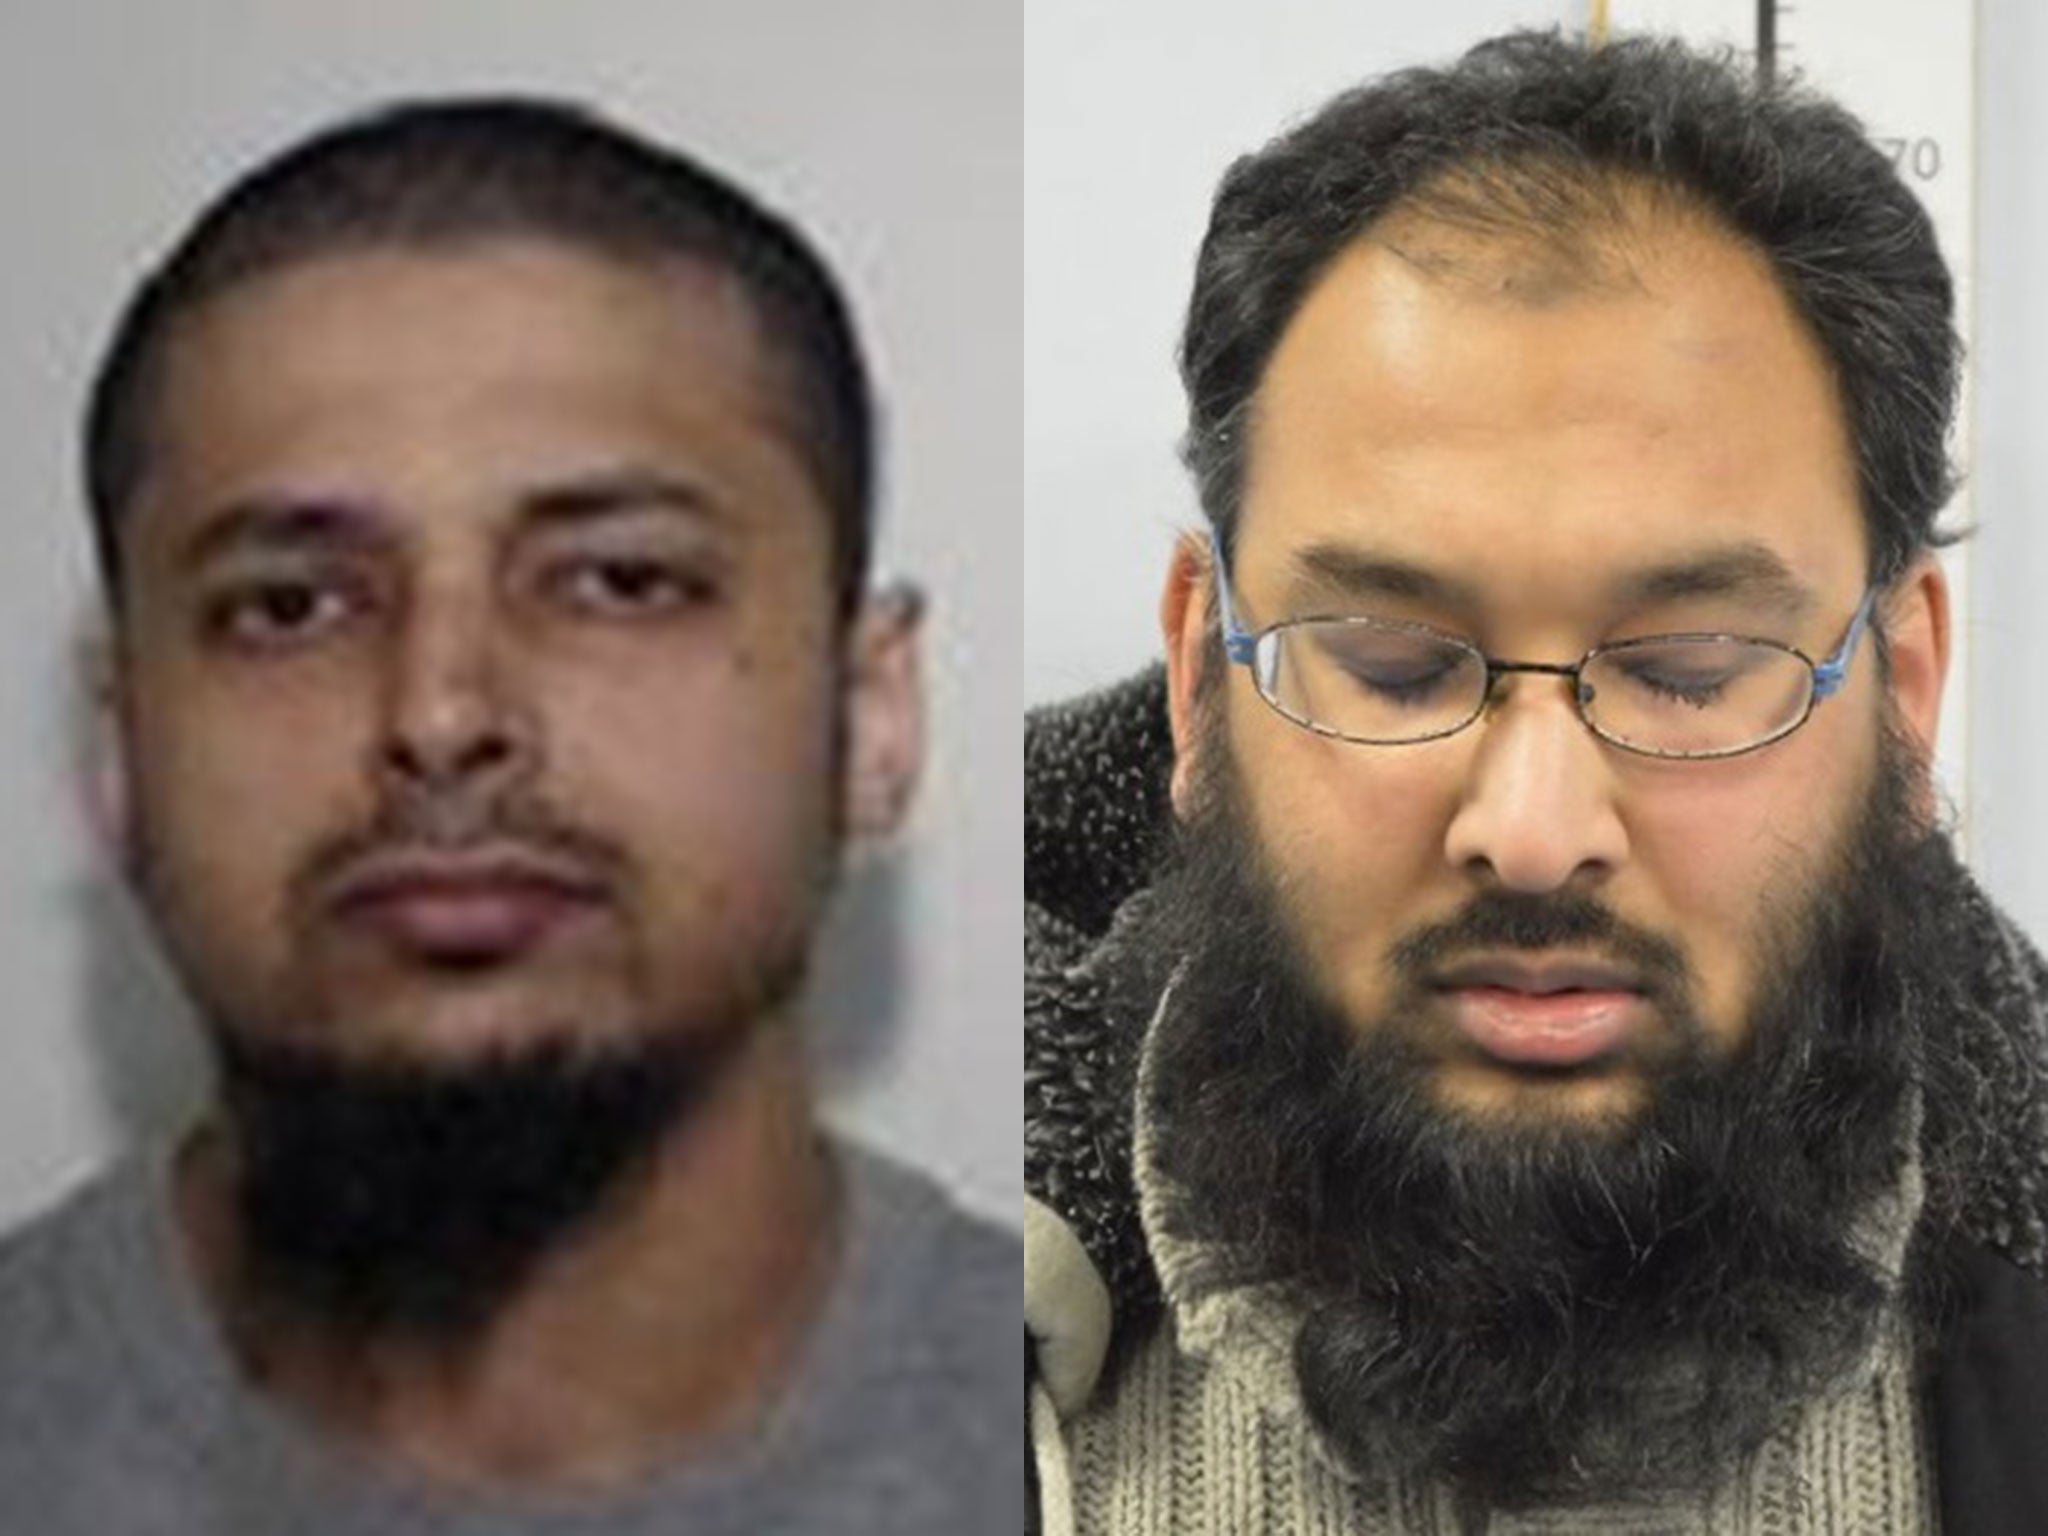 Muhammad Abdur Raheem Kamali and Mohammed Abdul Ahad were jailed for disseminating terrorist publications